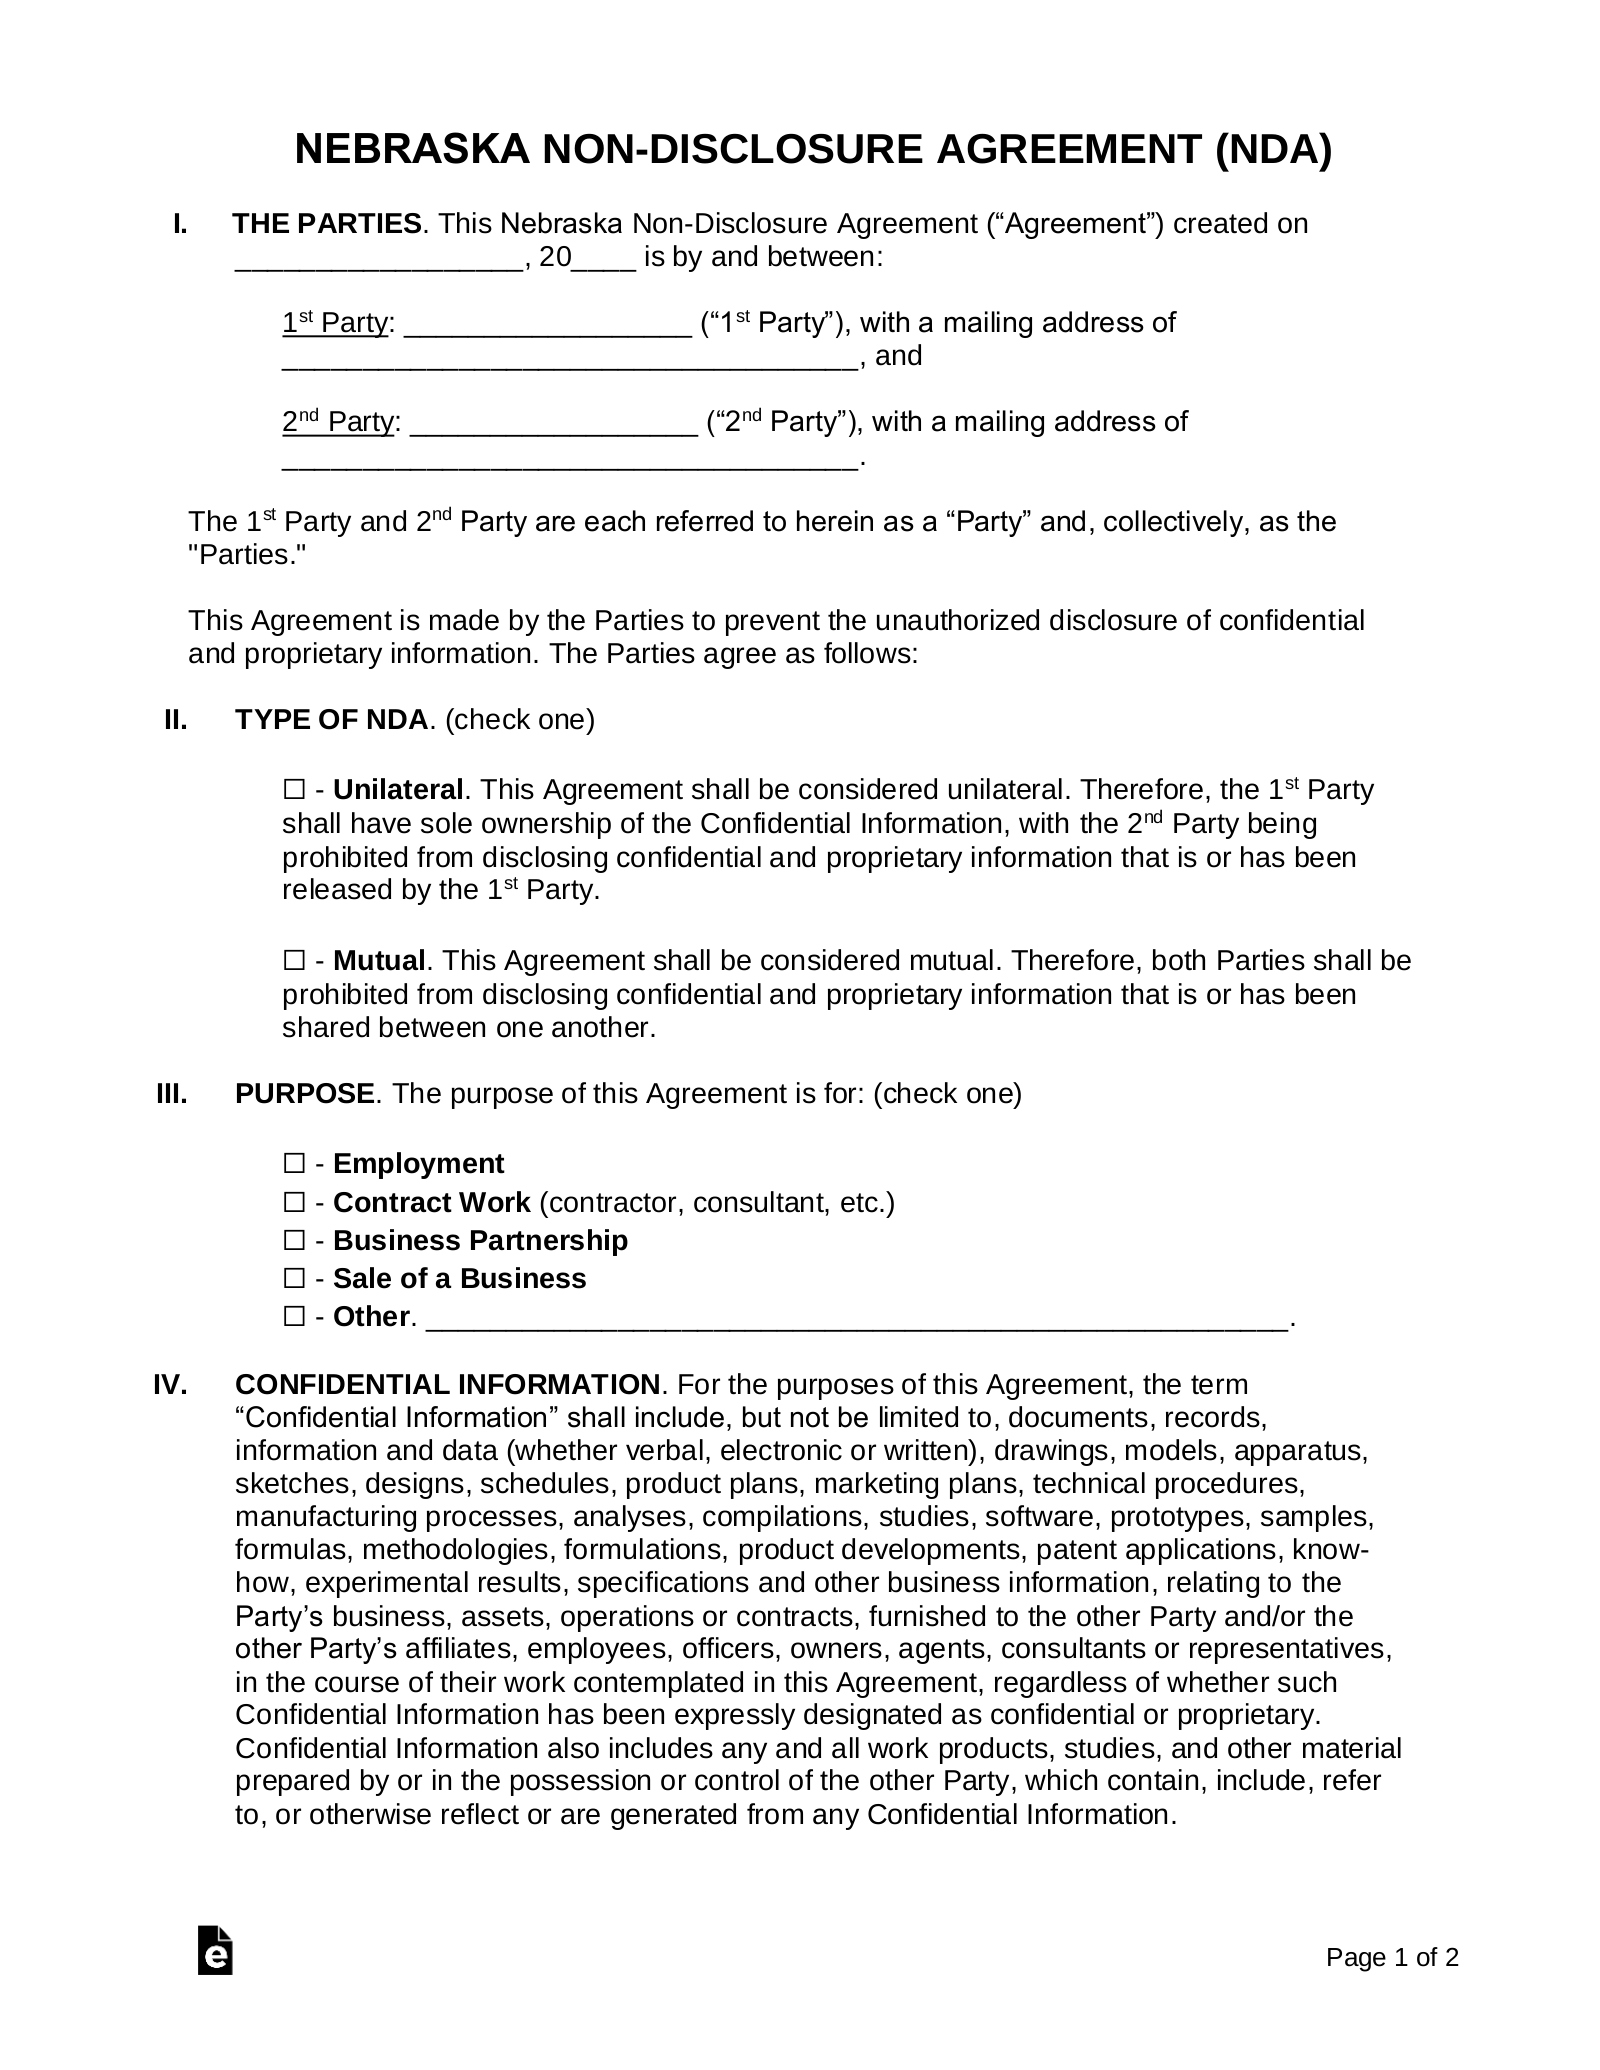 Nebraska Non-Disclosure Agreement (NDA) Template